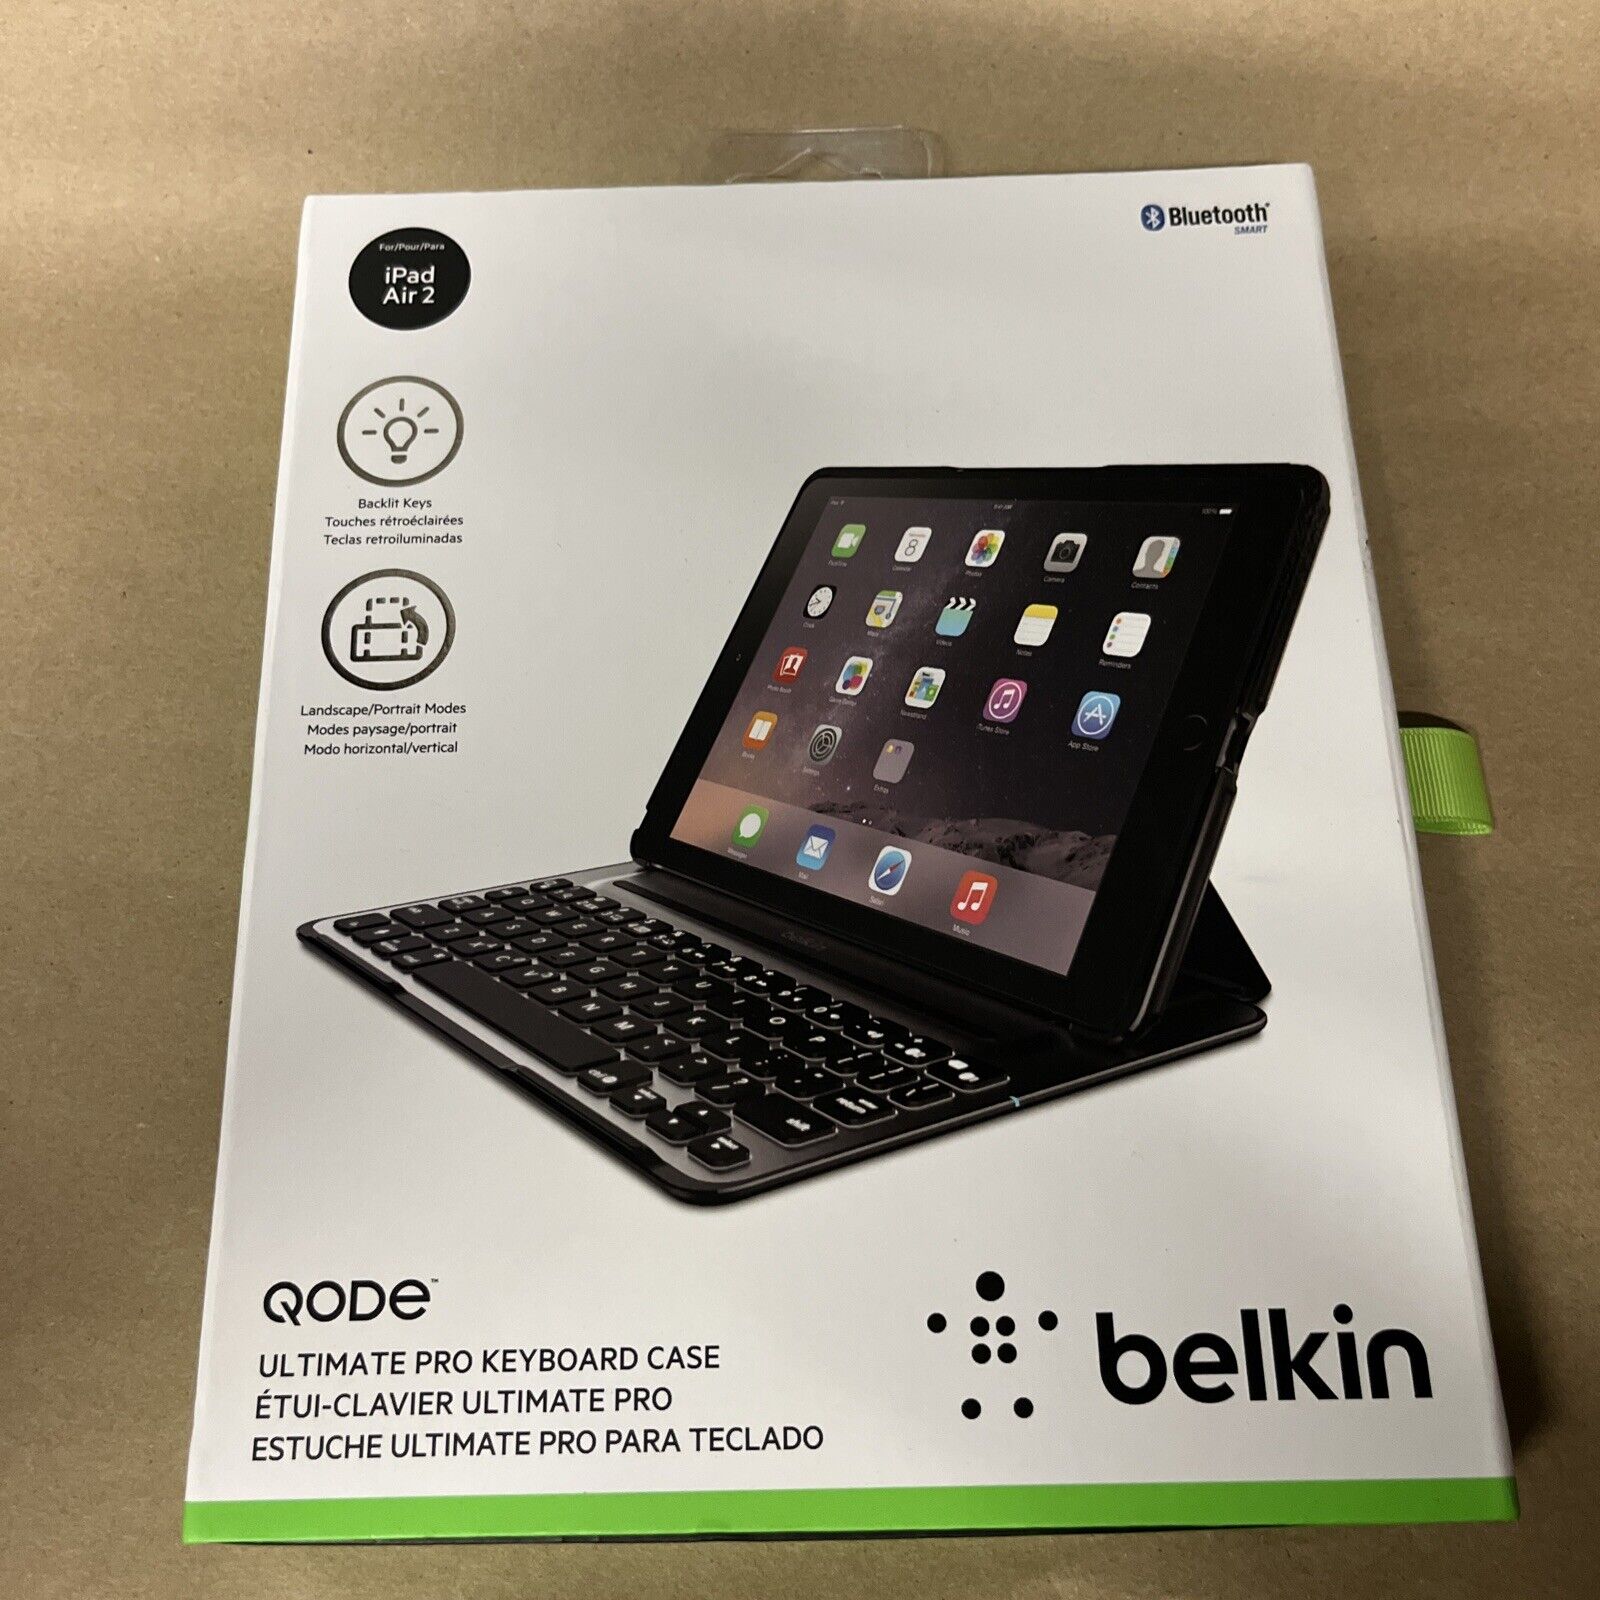 Belkin QODE Ultimate Pro Keyboard Case for iPad Air 2 (F5L176ttBLK) - Sealed